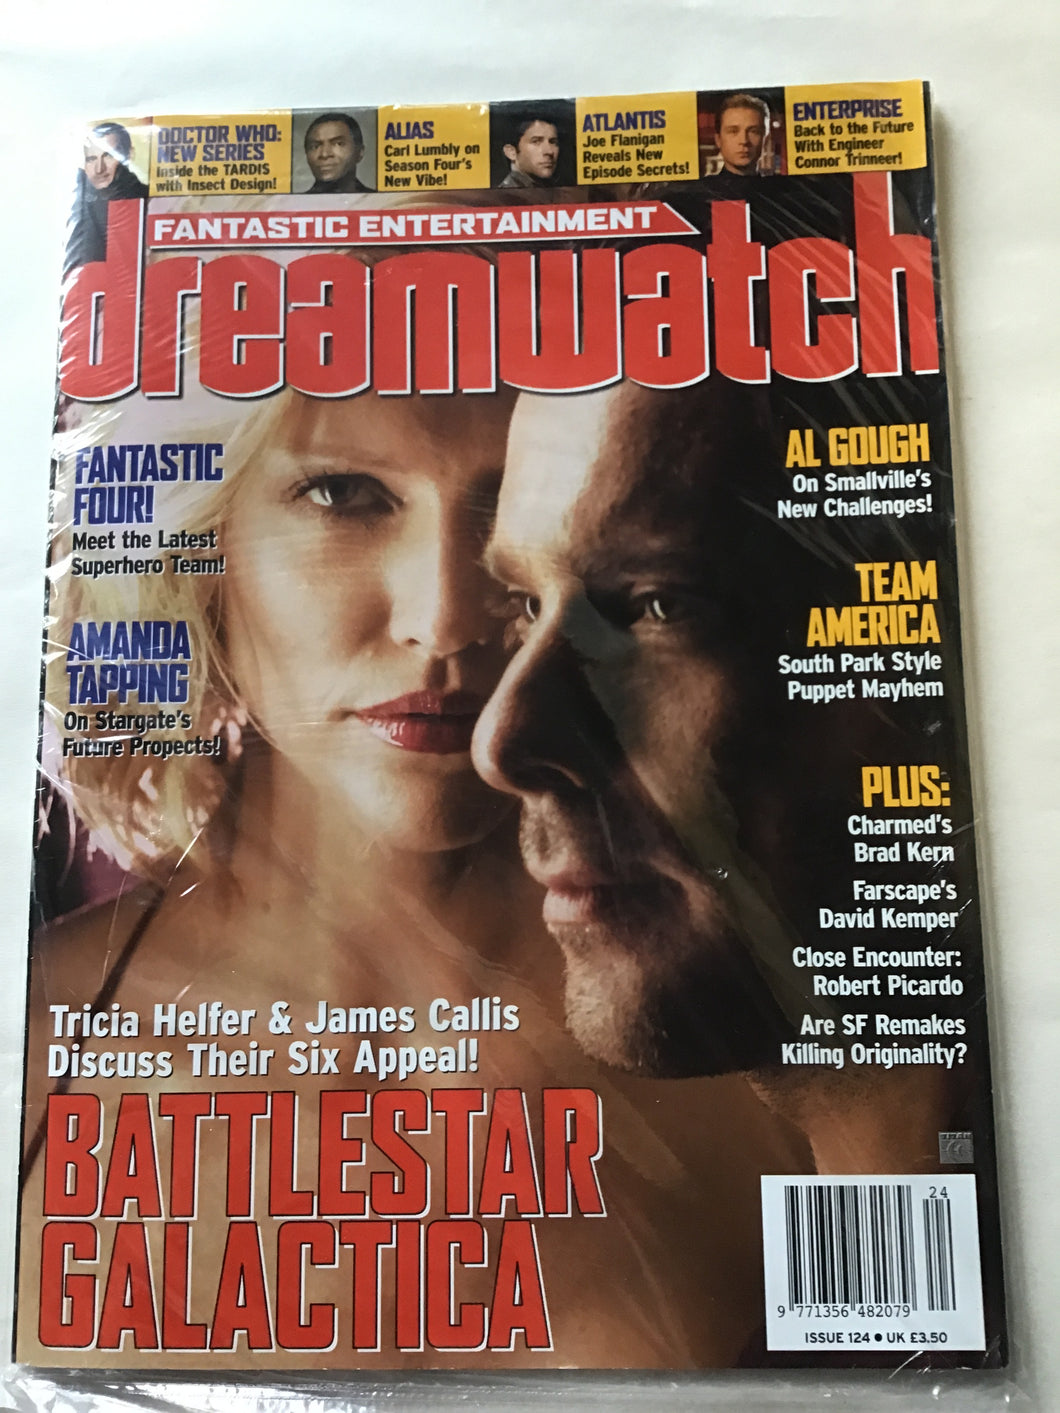 Dream watch magazine January 2005 fantastic for Stargate Battlestar Galactica team America